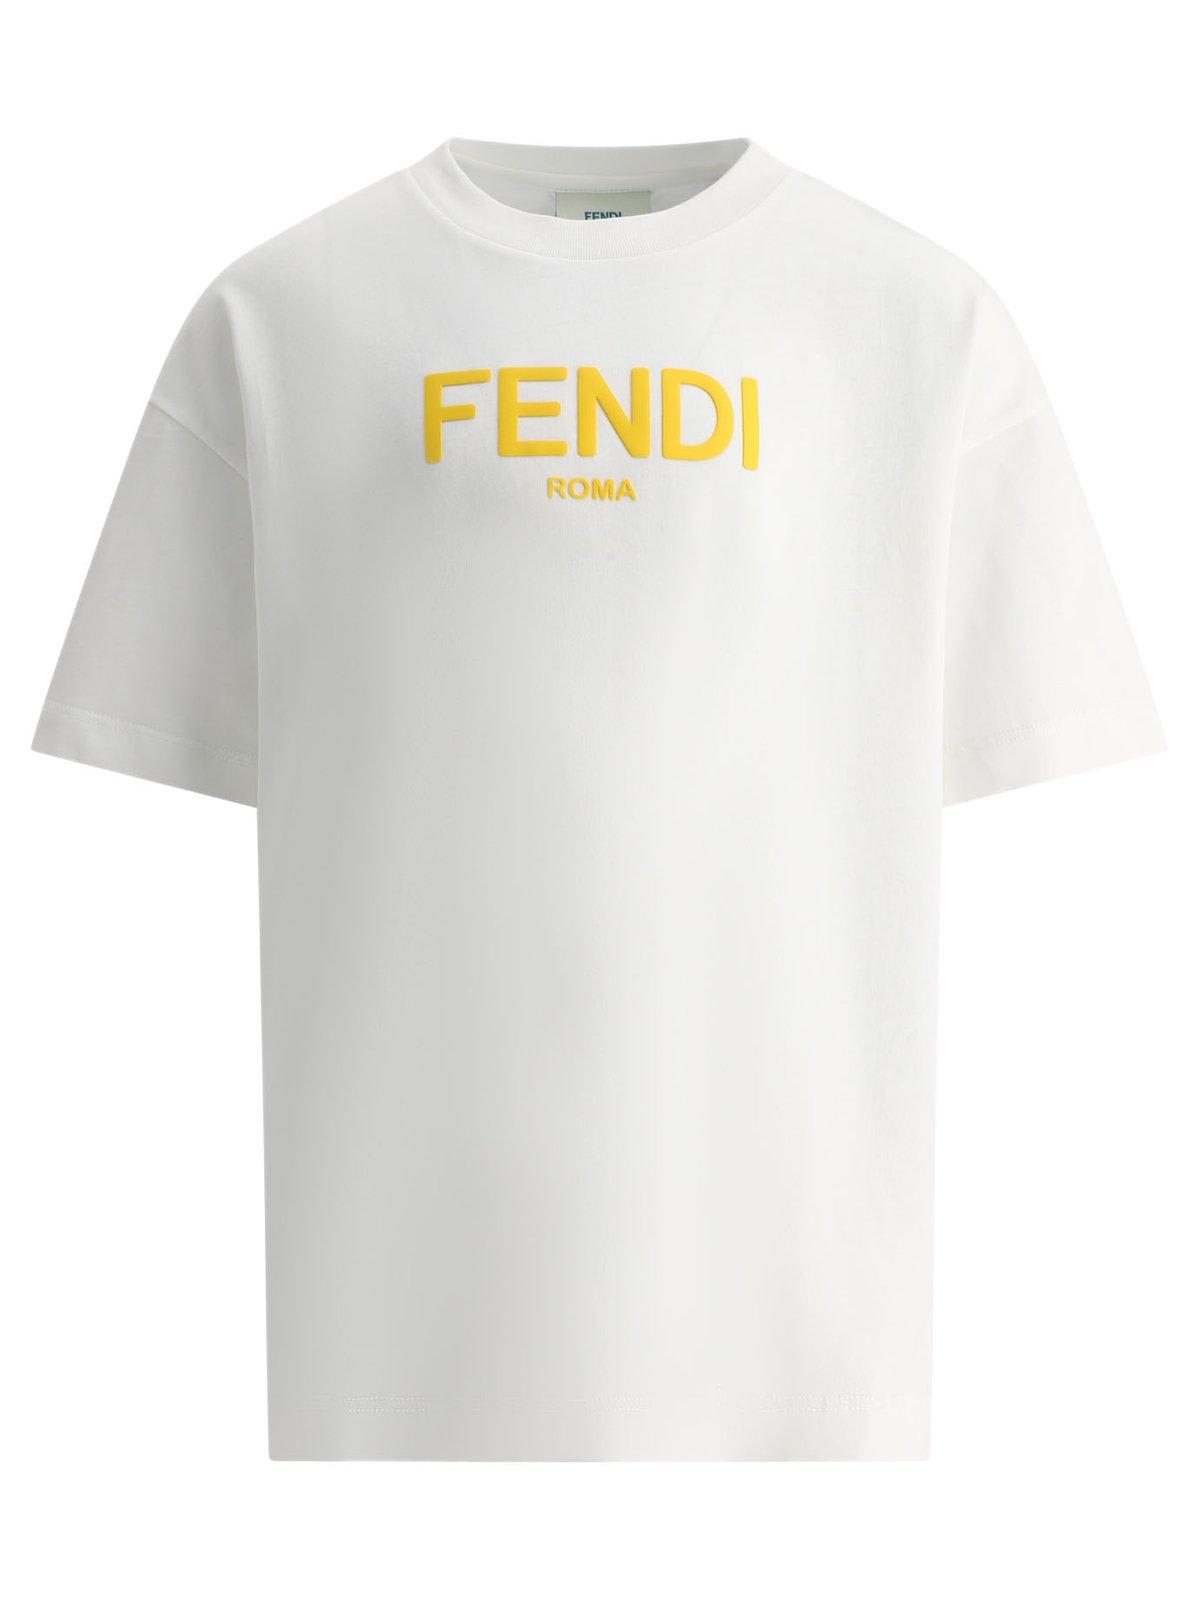 FENDI LOGO PRINTED CREWNECK T-SHIRT